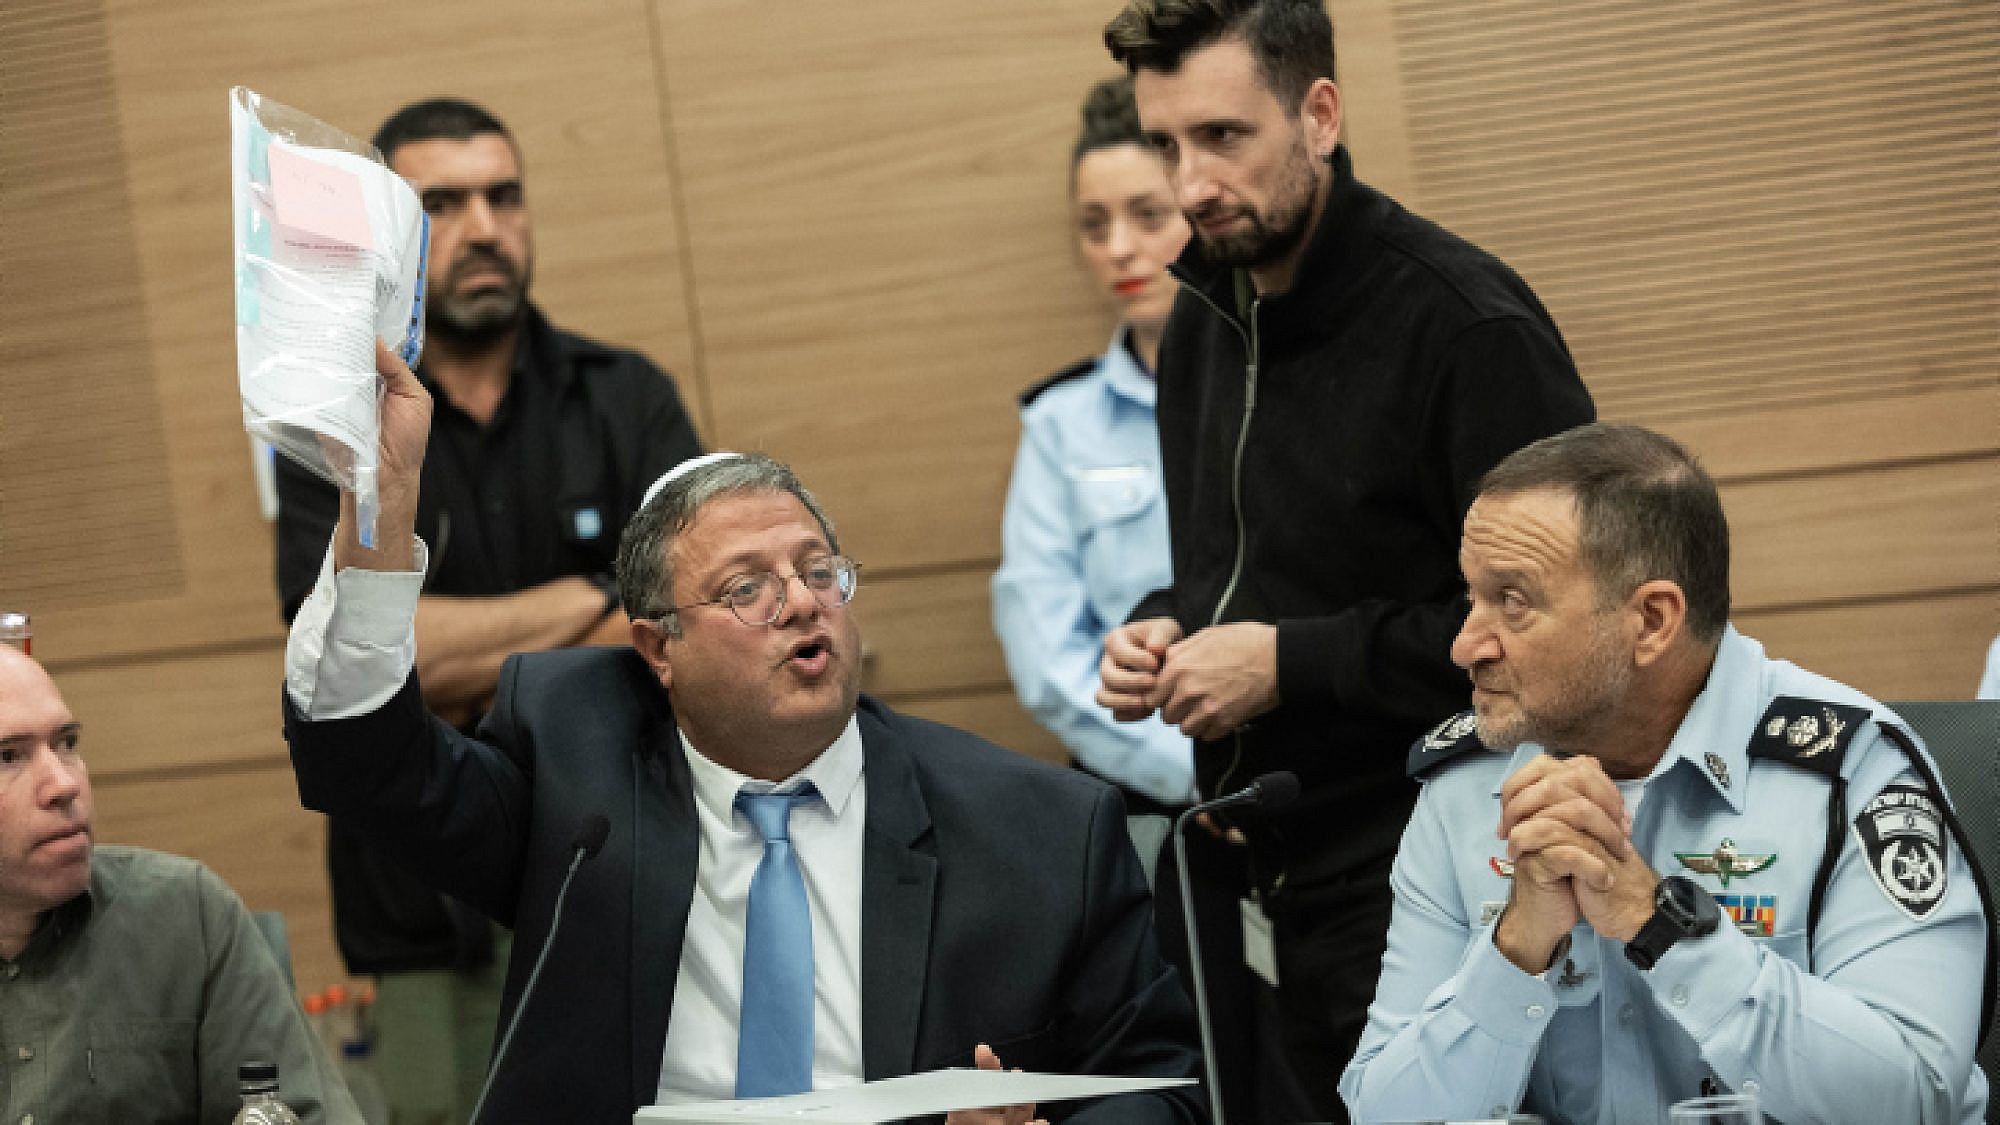 MK Itamar Ben-Gvir and Israel Police Commissioner Kobi Shabtai at a committee meeting in the Knesset, Dec. 14, 2022. Photo by Yonatan Sindel/Flash90.